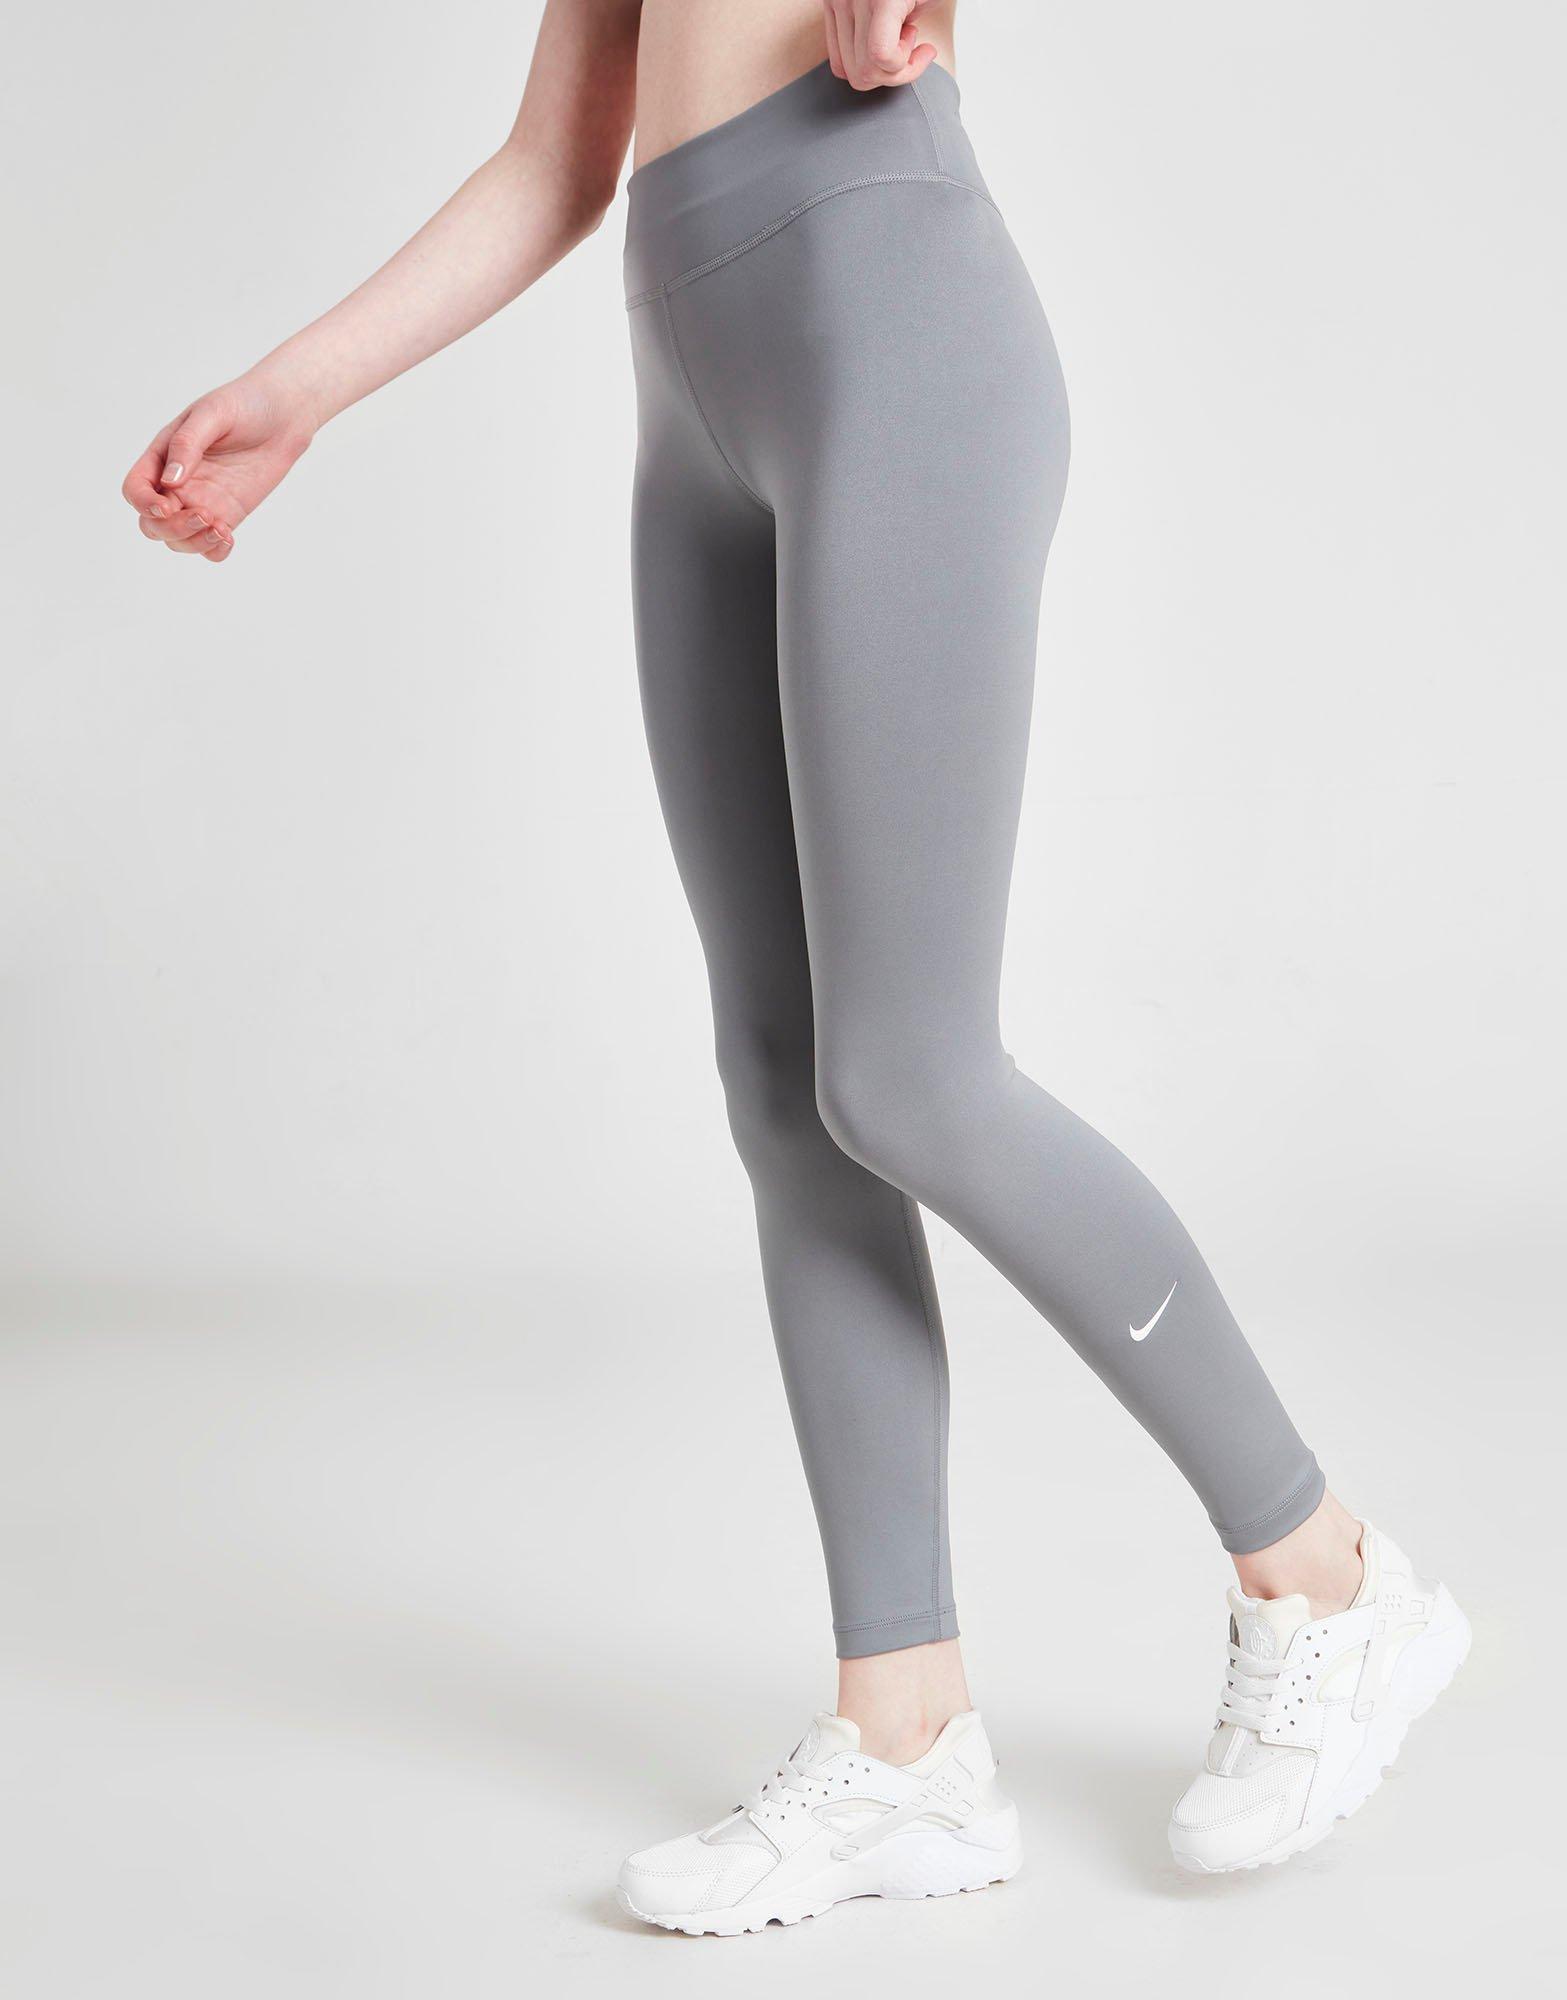 NIKE - WOMENS UK SMALL, Nike Pro Dri-Fit Grey Performance Leggings - Used  (J4) £14.99 - PicClick UK